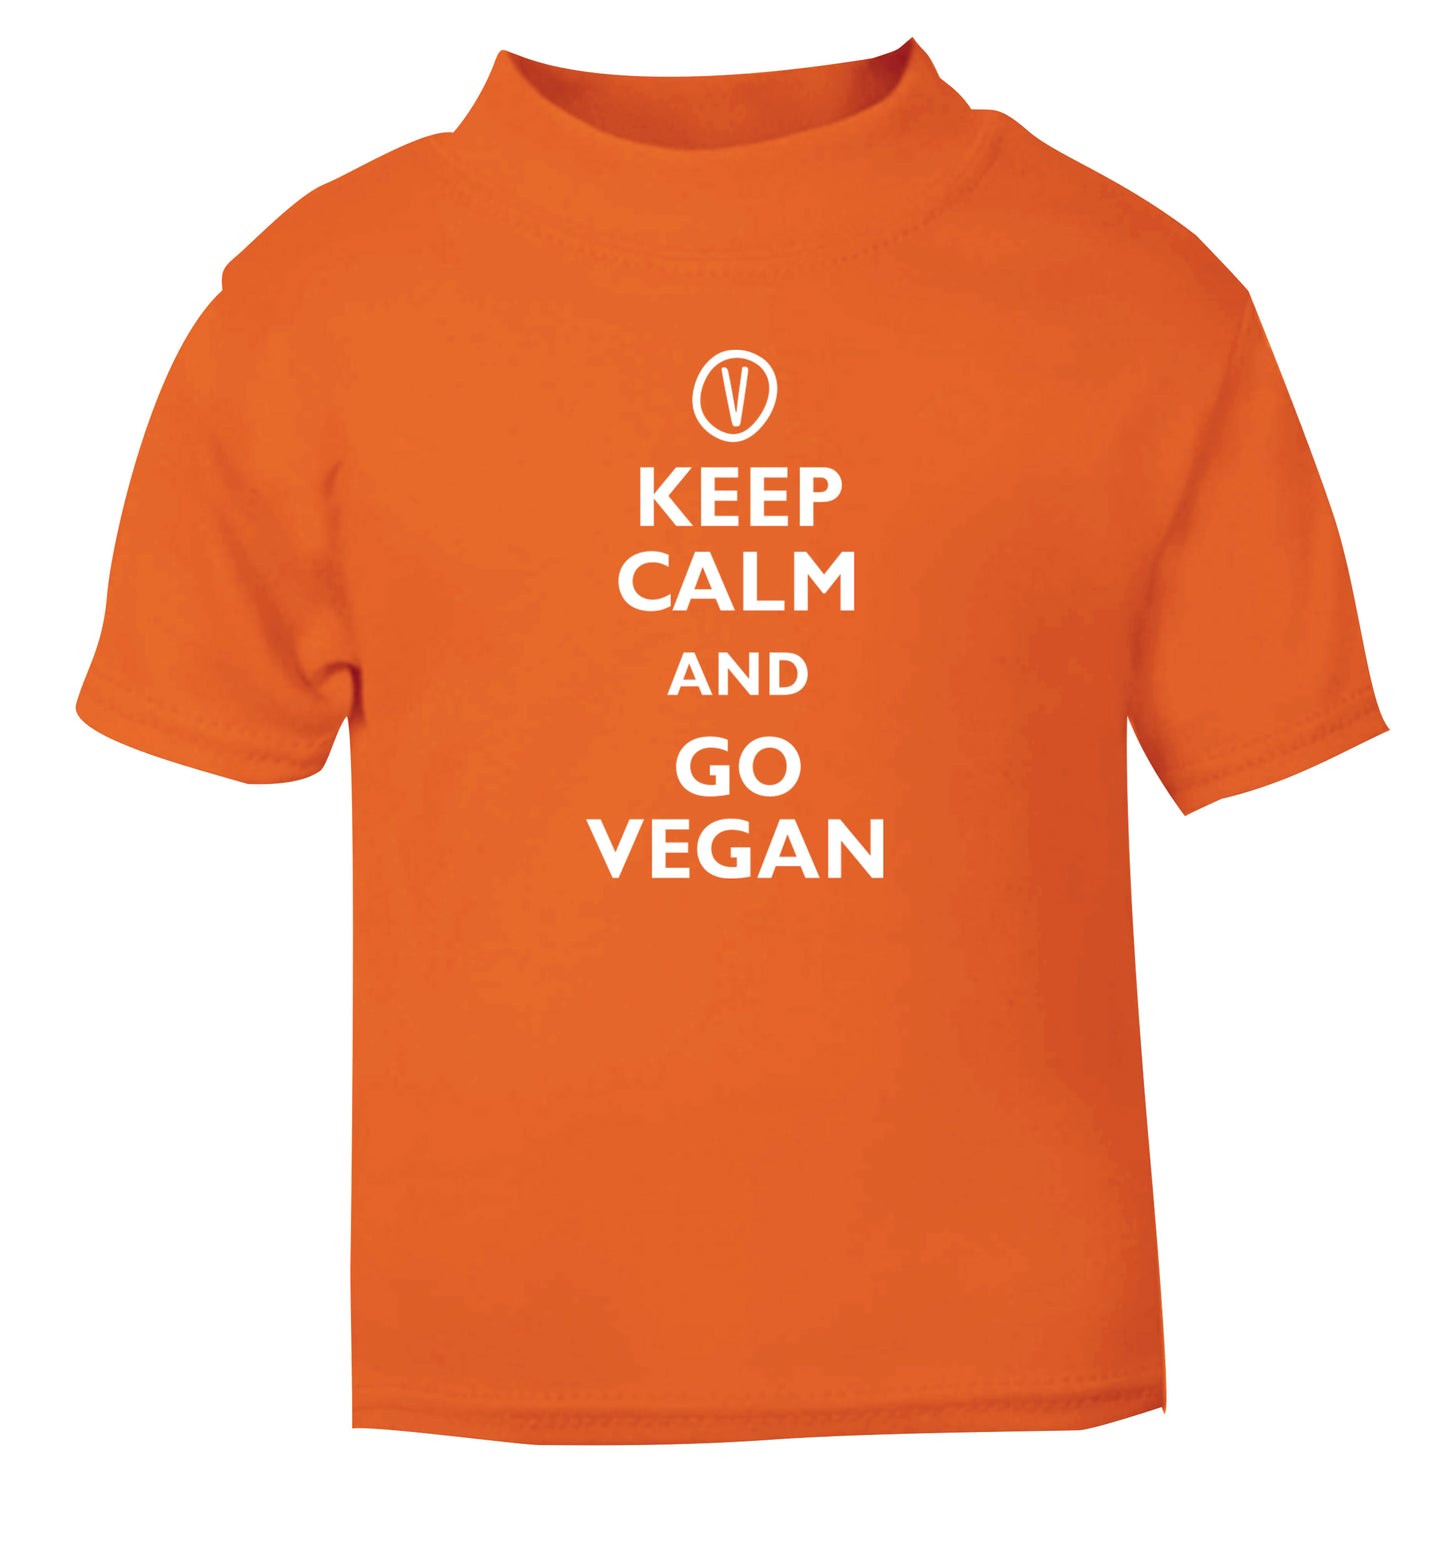 Keep calm and go vegan orange Baby Toddler Tshirt 2 Years